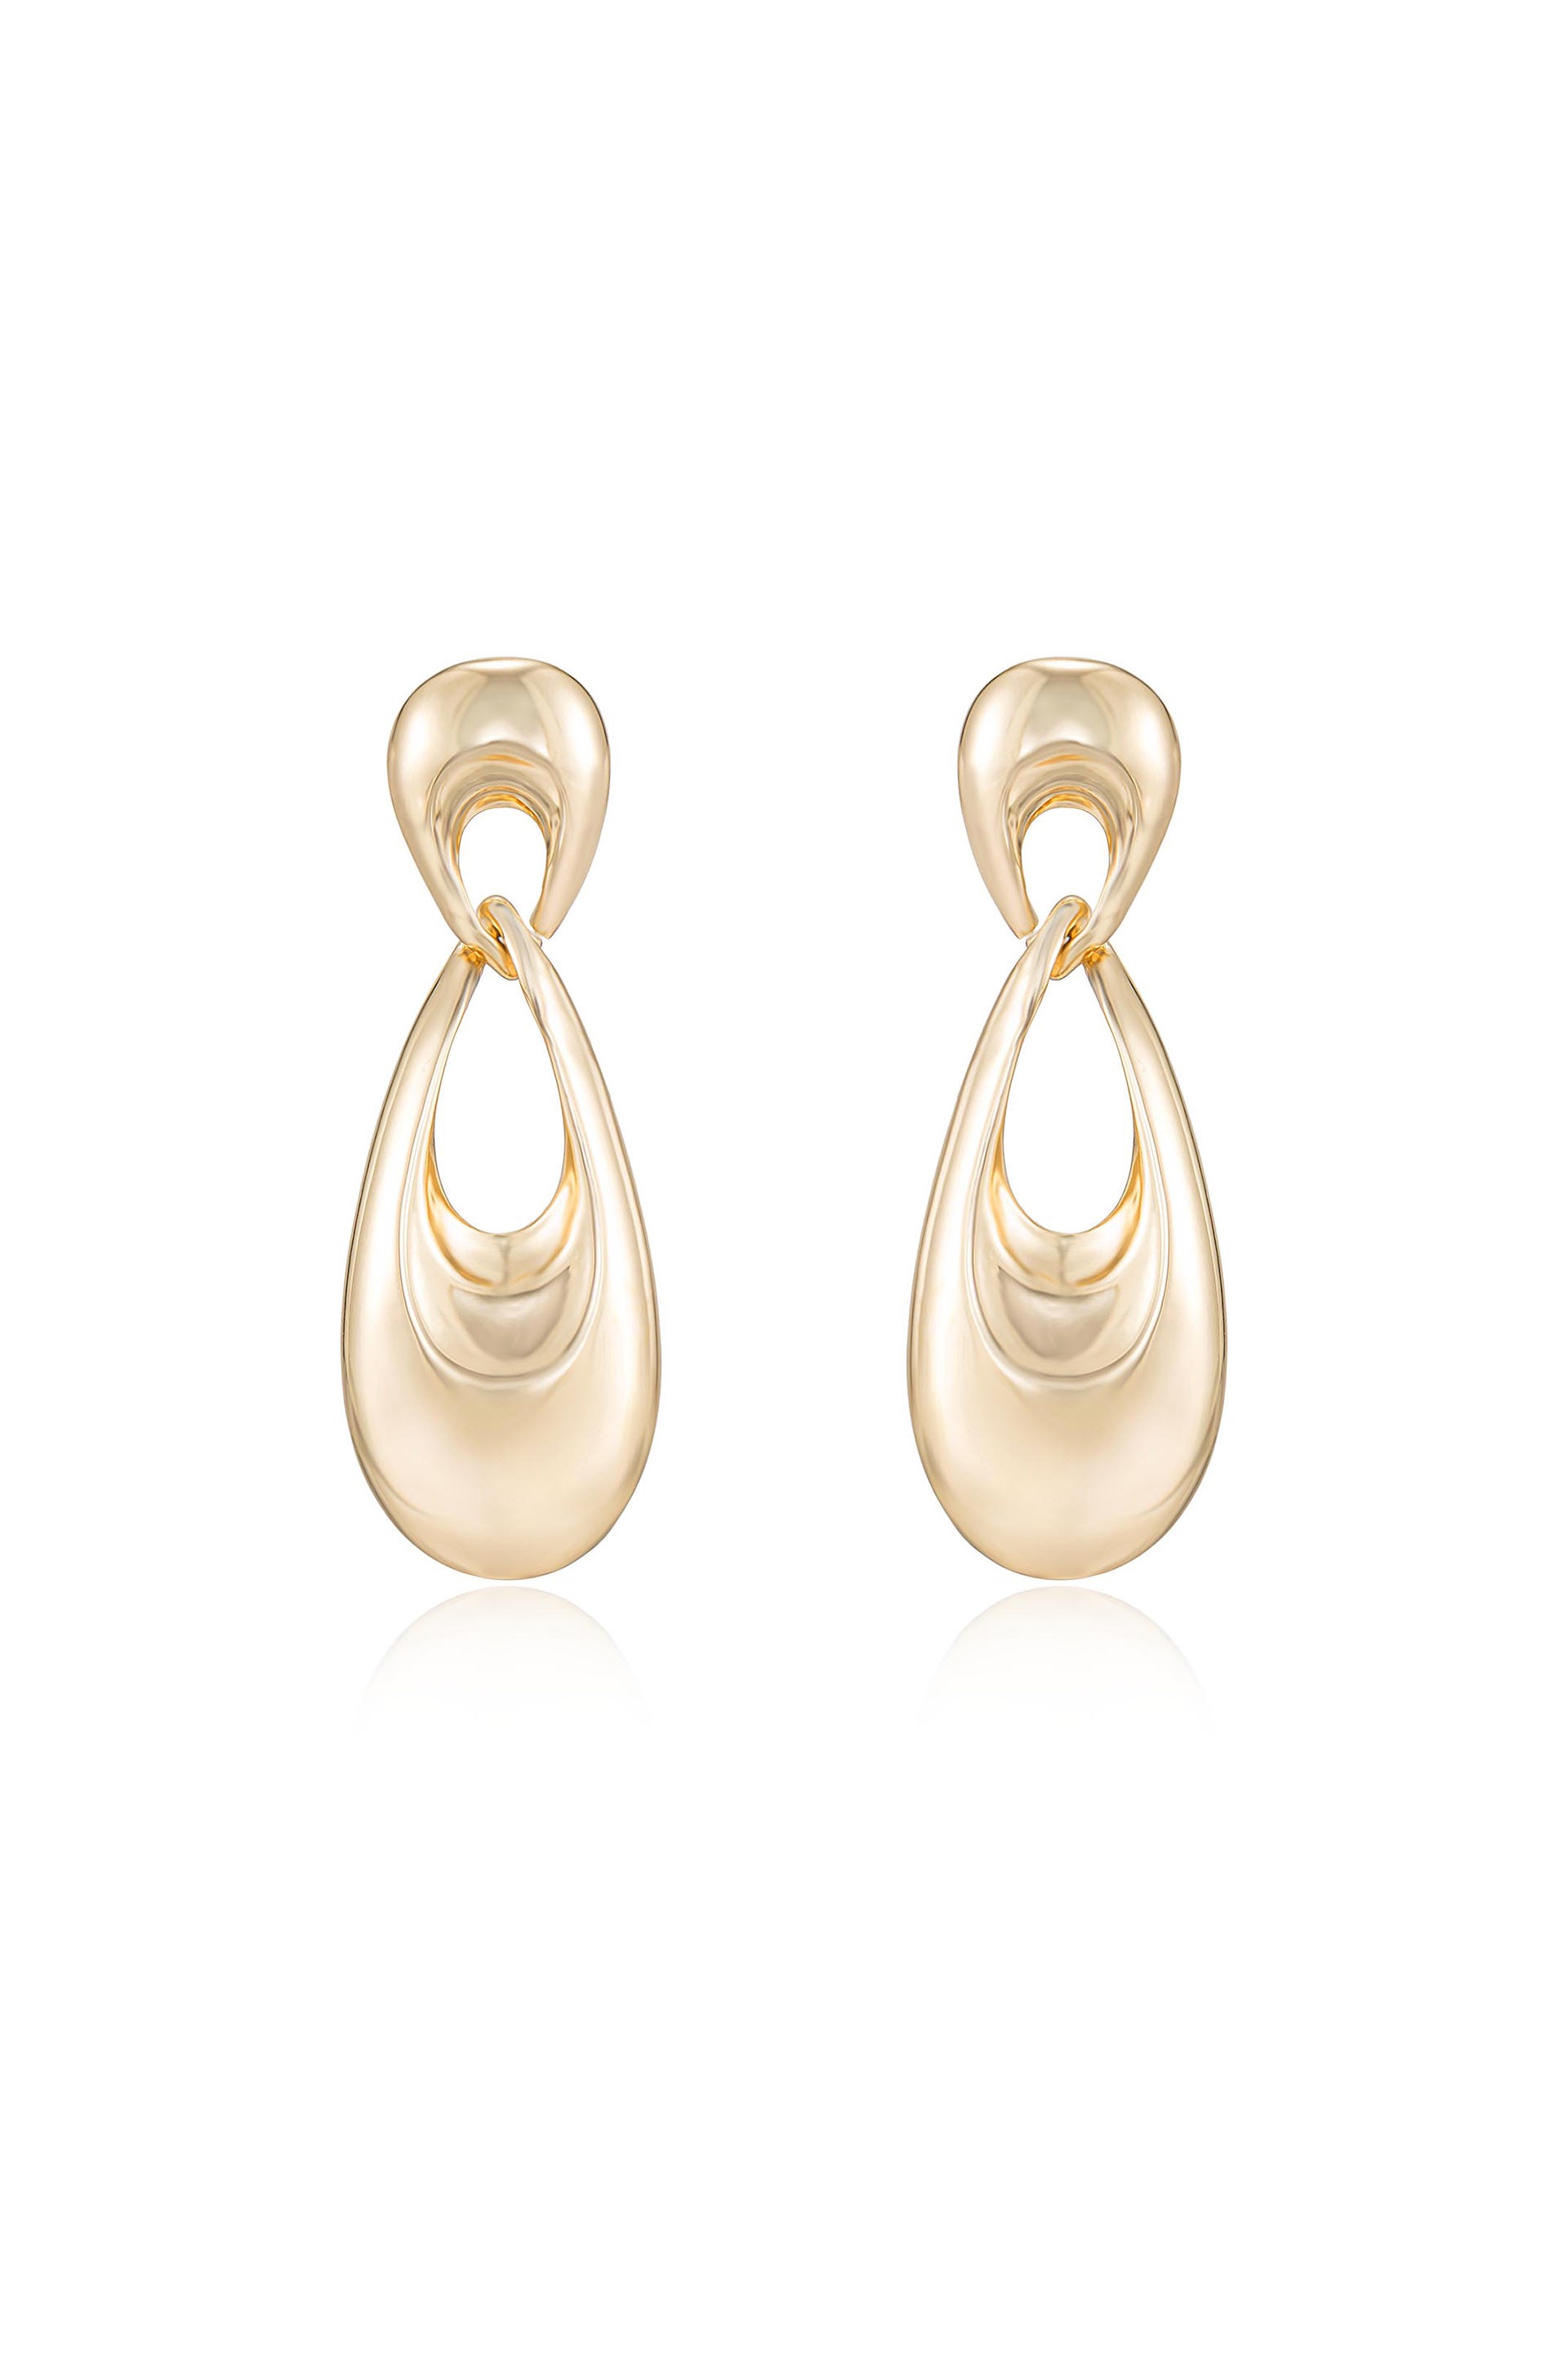 Pandora Gold Infinity Earrings Argento.com